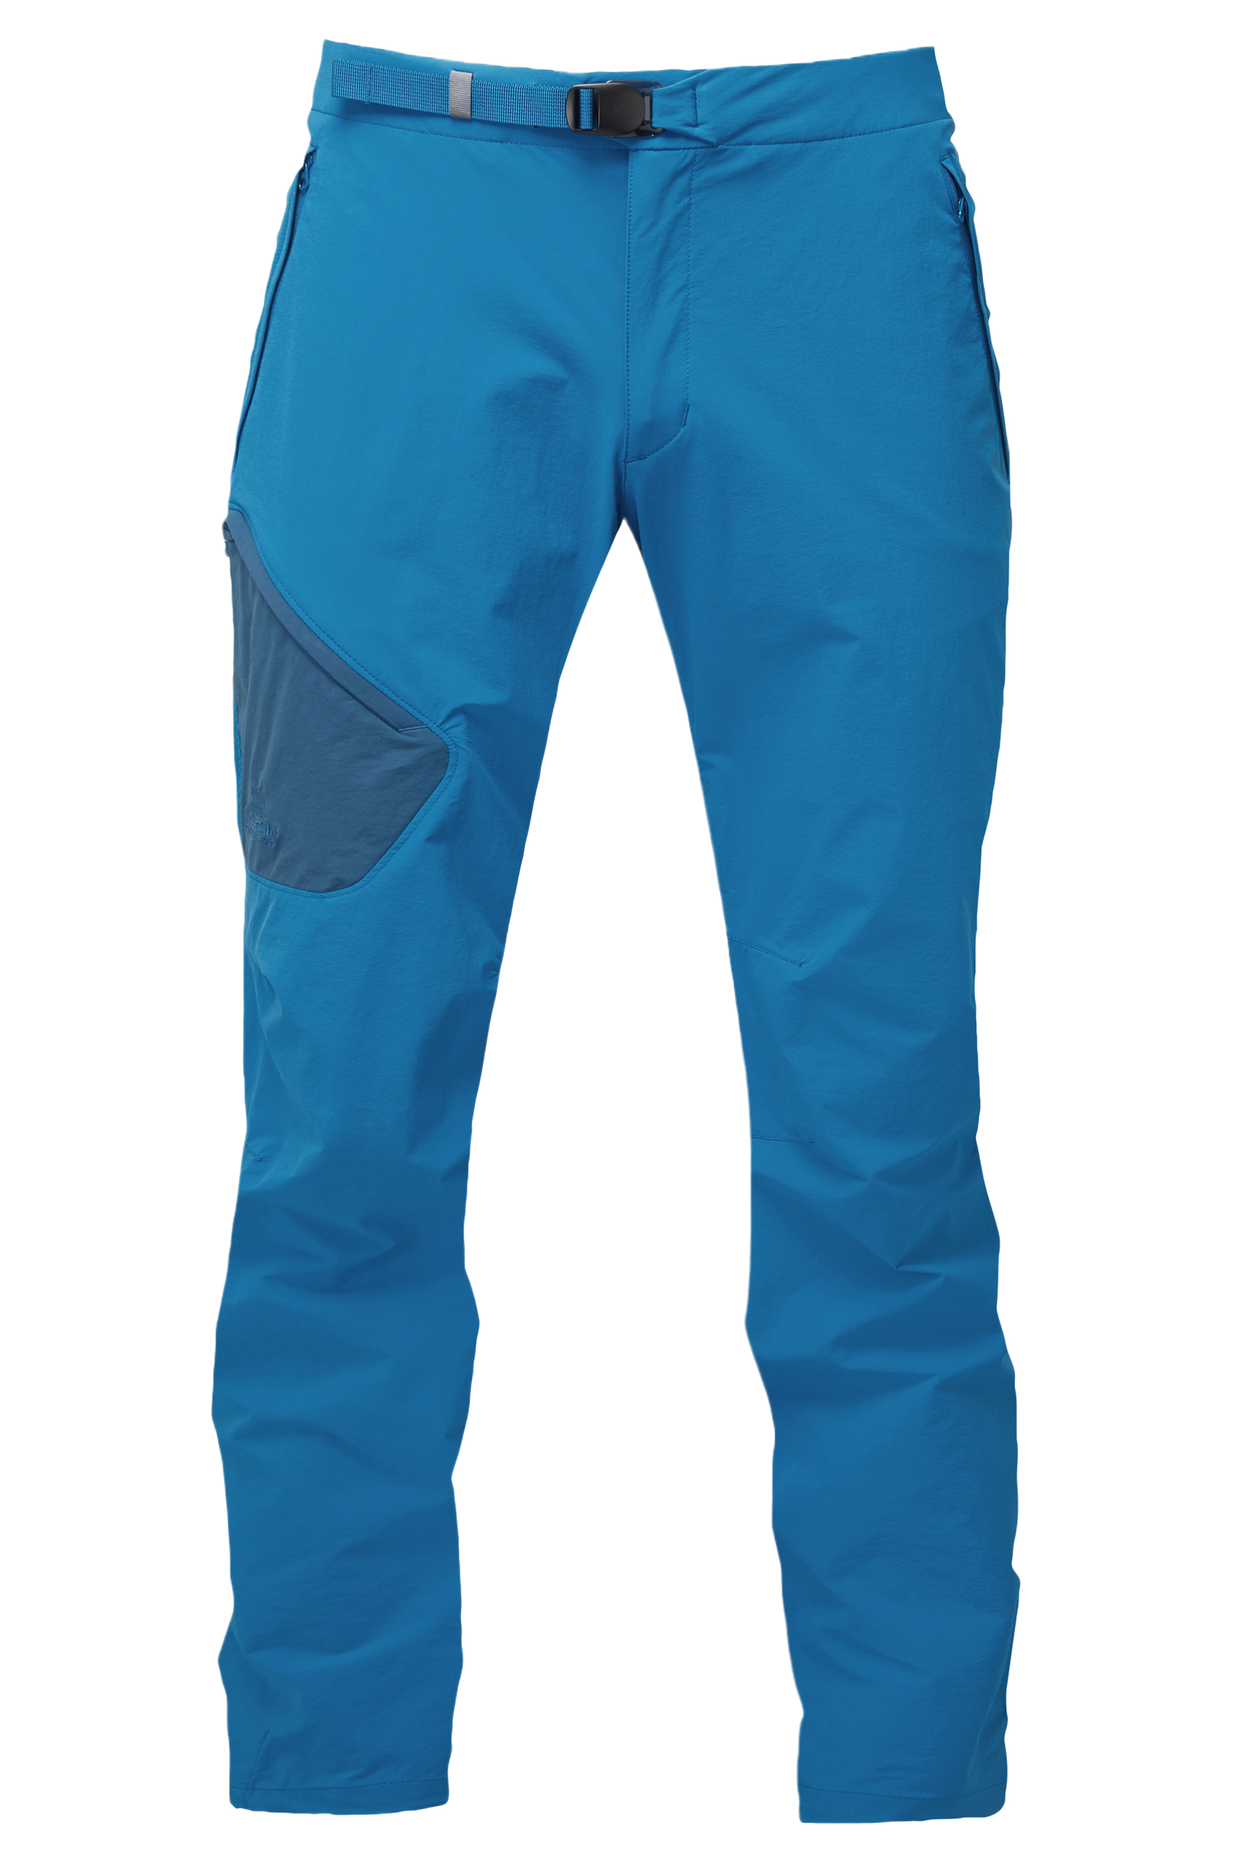 Mountain equipment pánské softshellové kalhoty Comici 2 Mens Pant - běžná délka Barva: Me-01636 Alto/Majolica, Velikost: XS